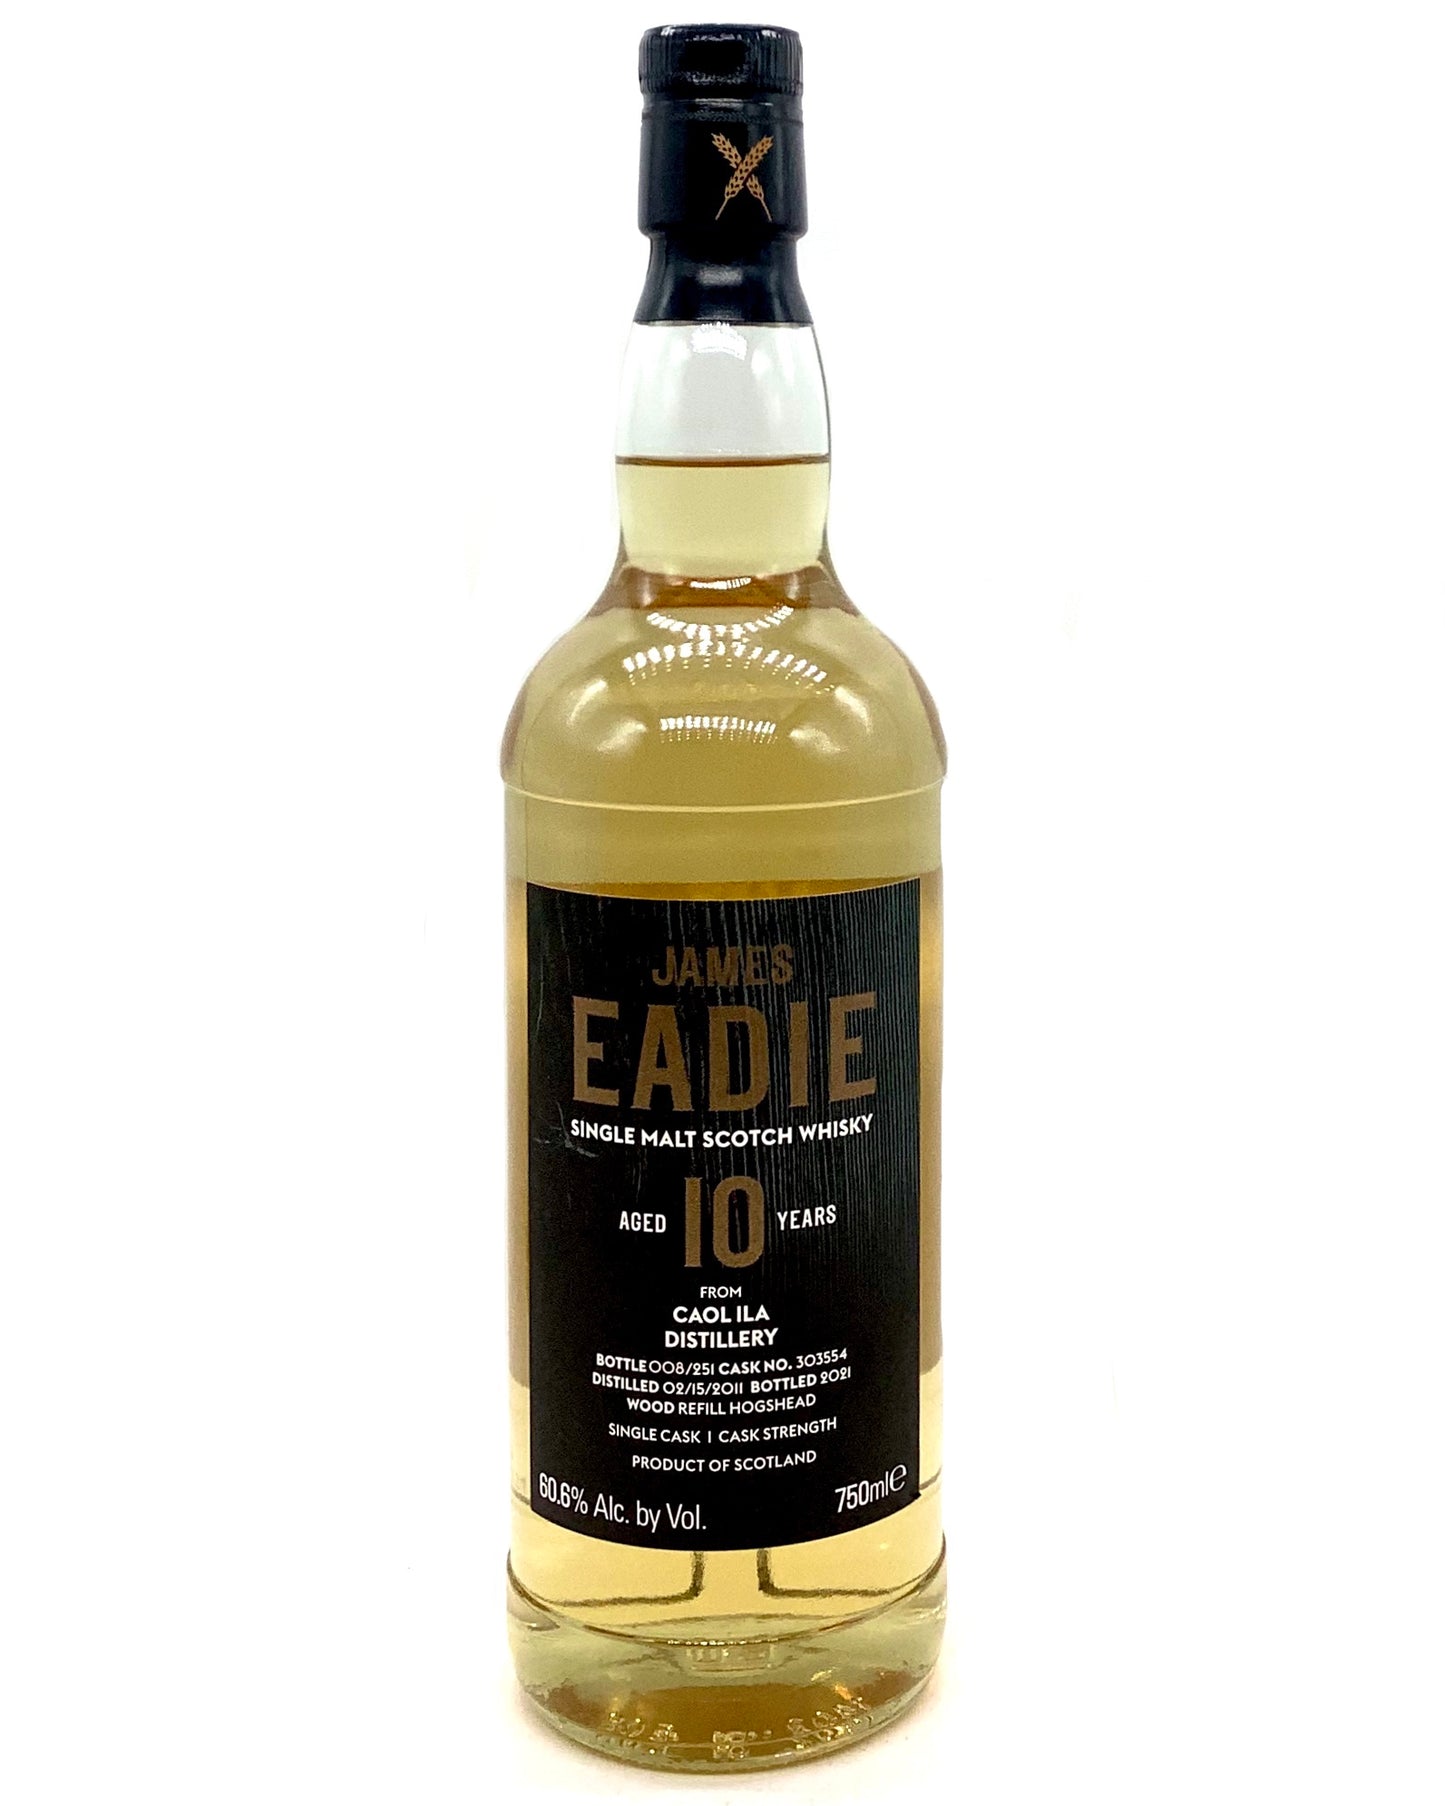 James Eadie 10 Year Single Malt Scotch Whisky, Caol Ila Distillery newarrival